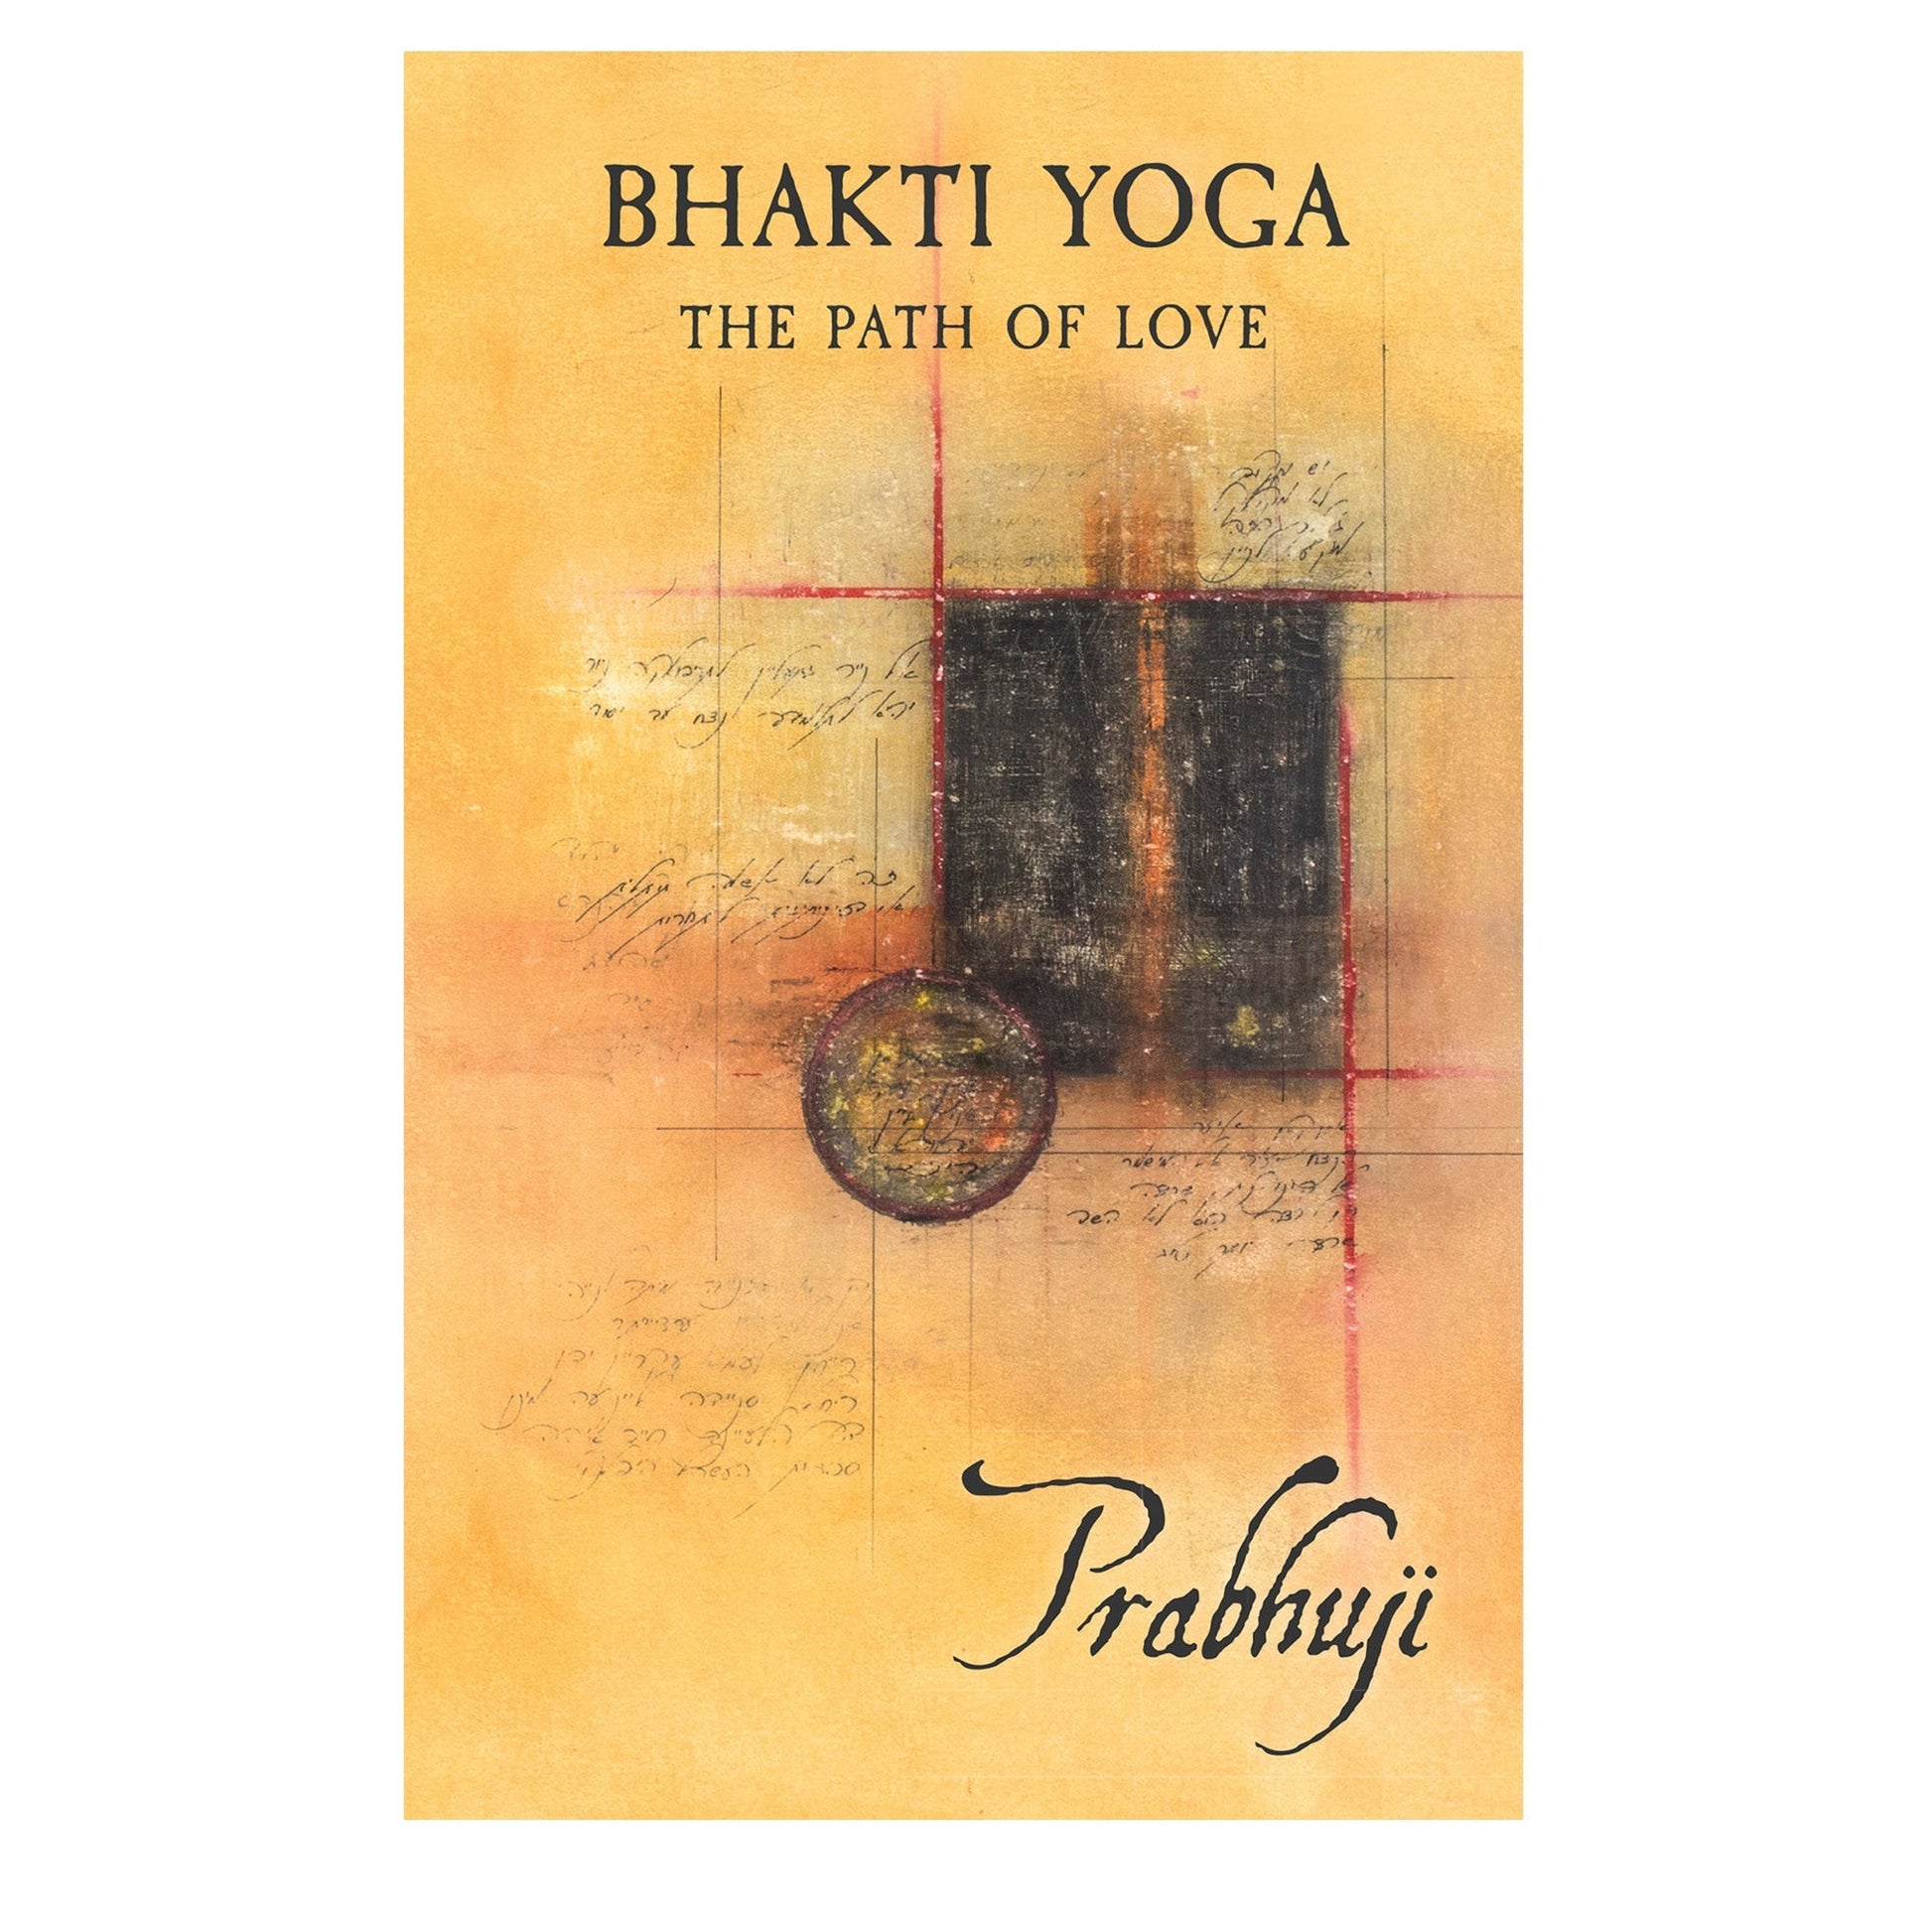 Bhakti yoga - the path of love by Prabhuji (Paperback- English) - Tree Spirit Wellness